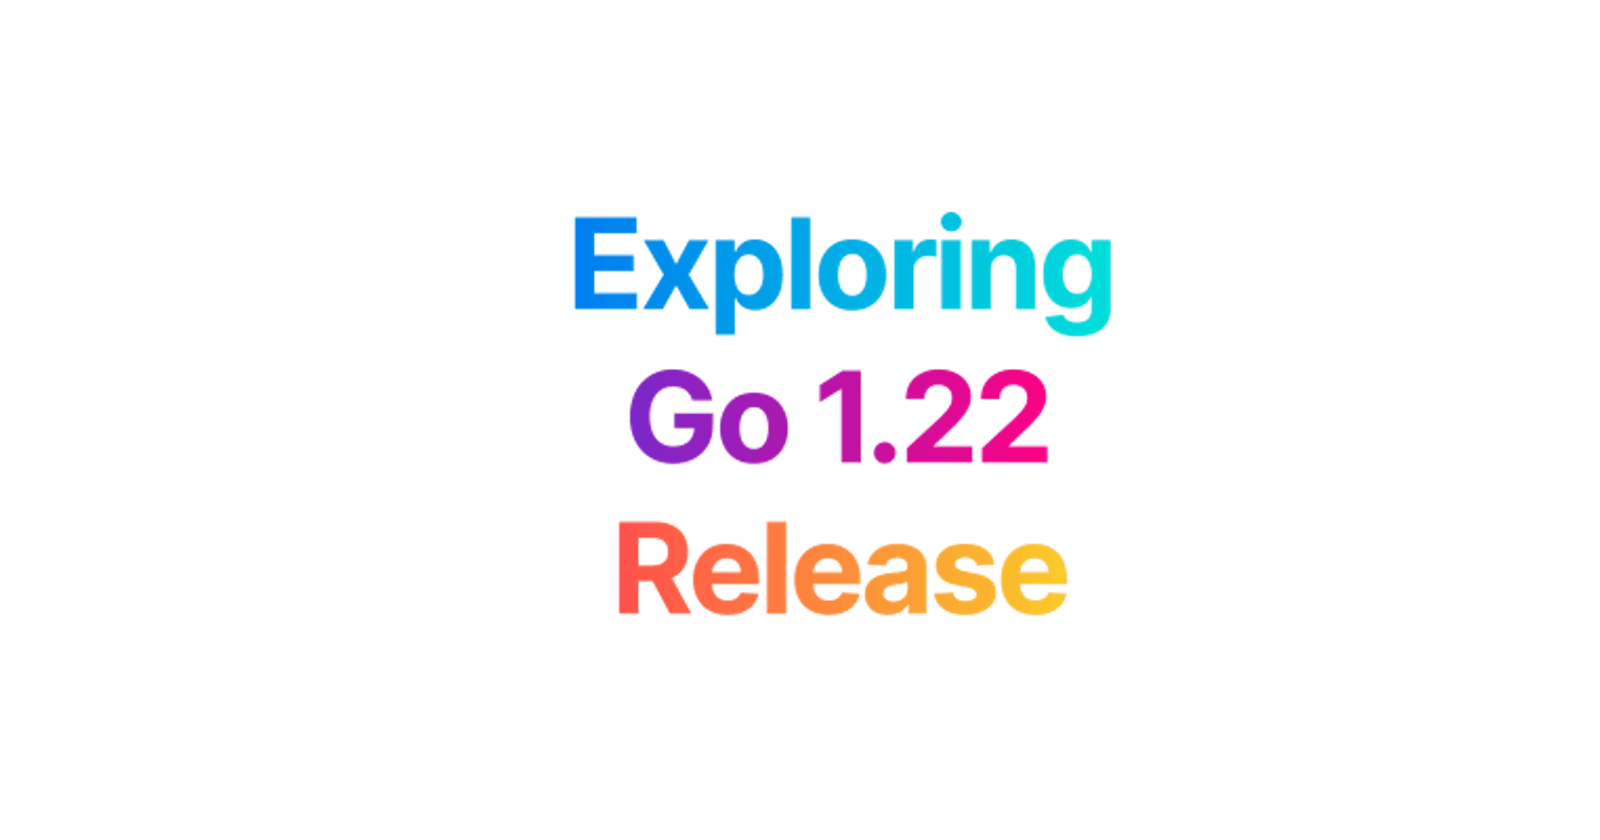 Exploring Go 1.22 Release